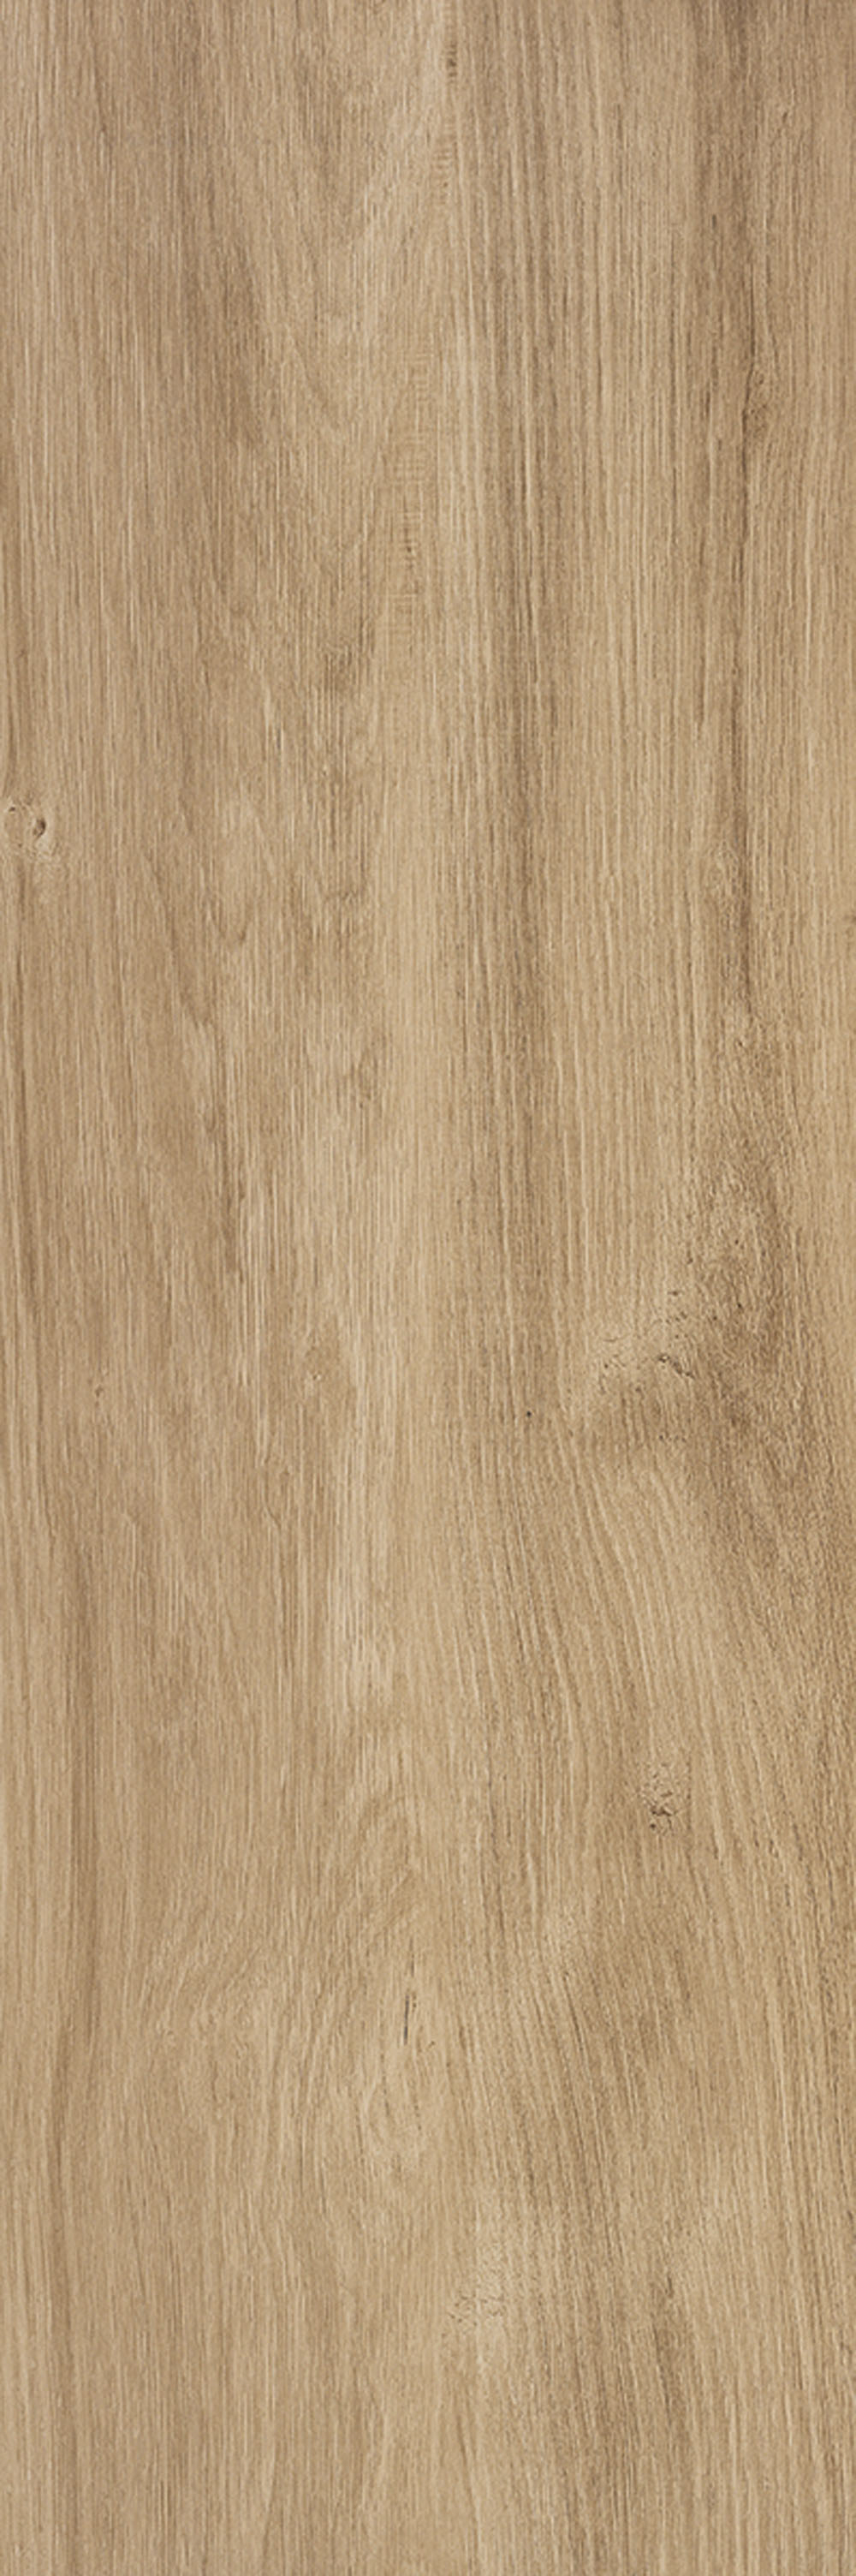 Wood Effect Bark Frassino 1200 x 400mm